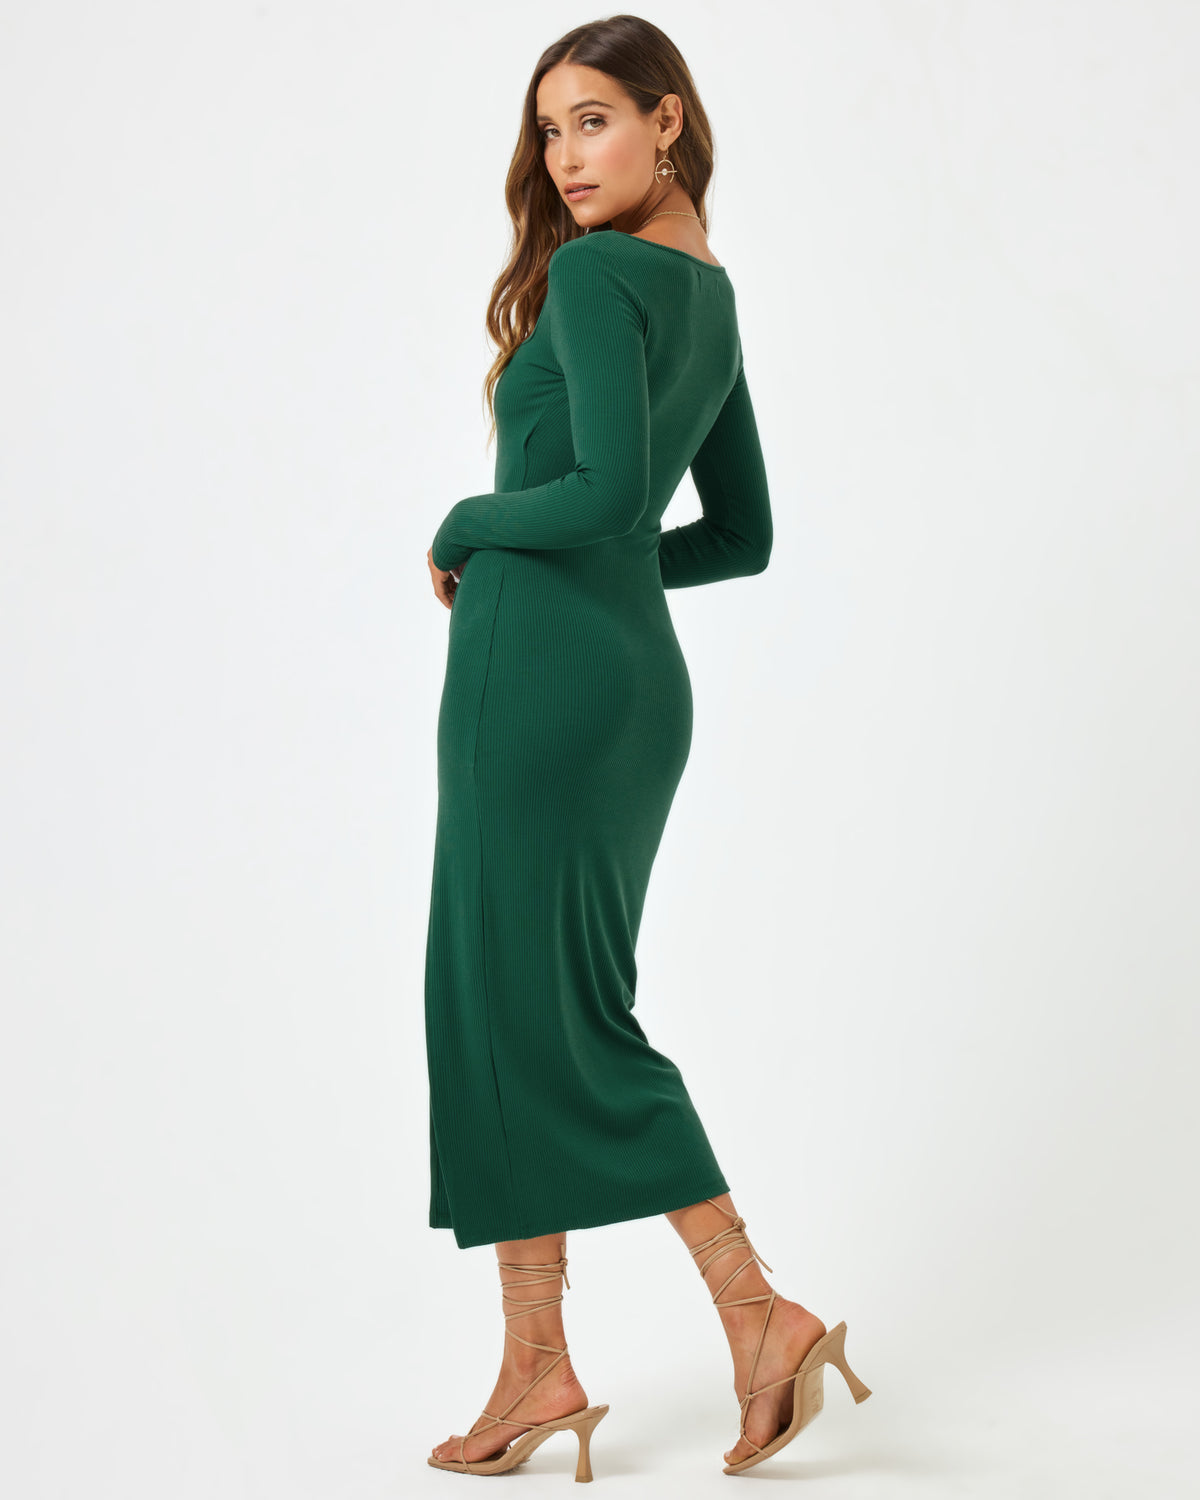 Windsor Dress - Emerald Emerald | Model: Anna (size: S)